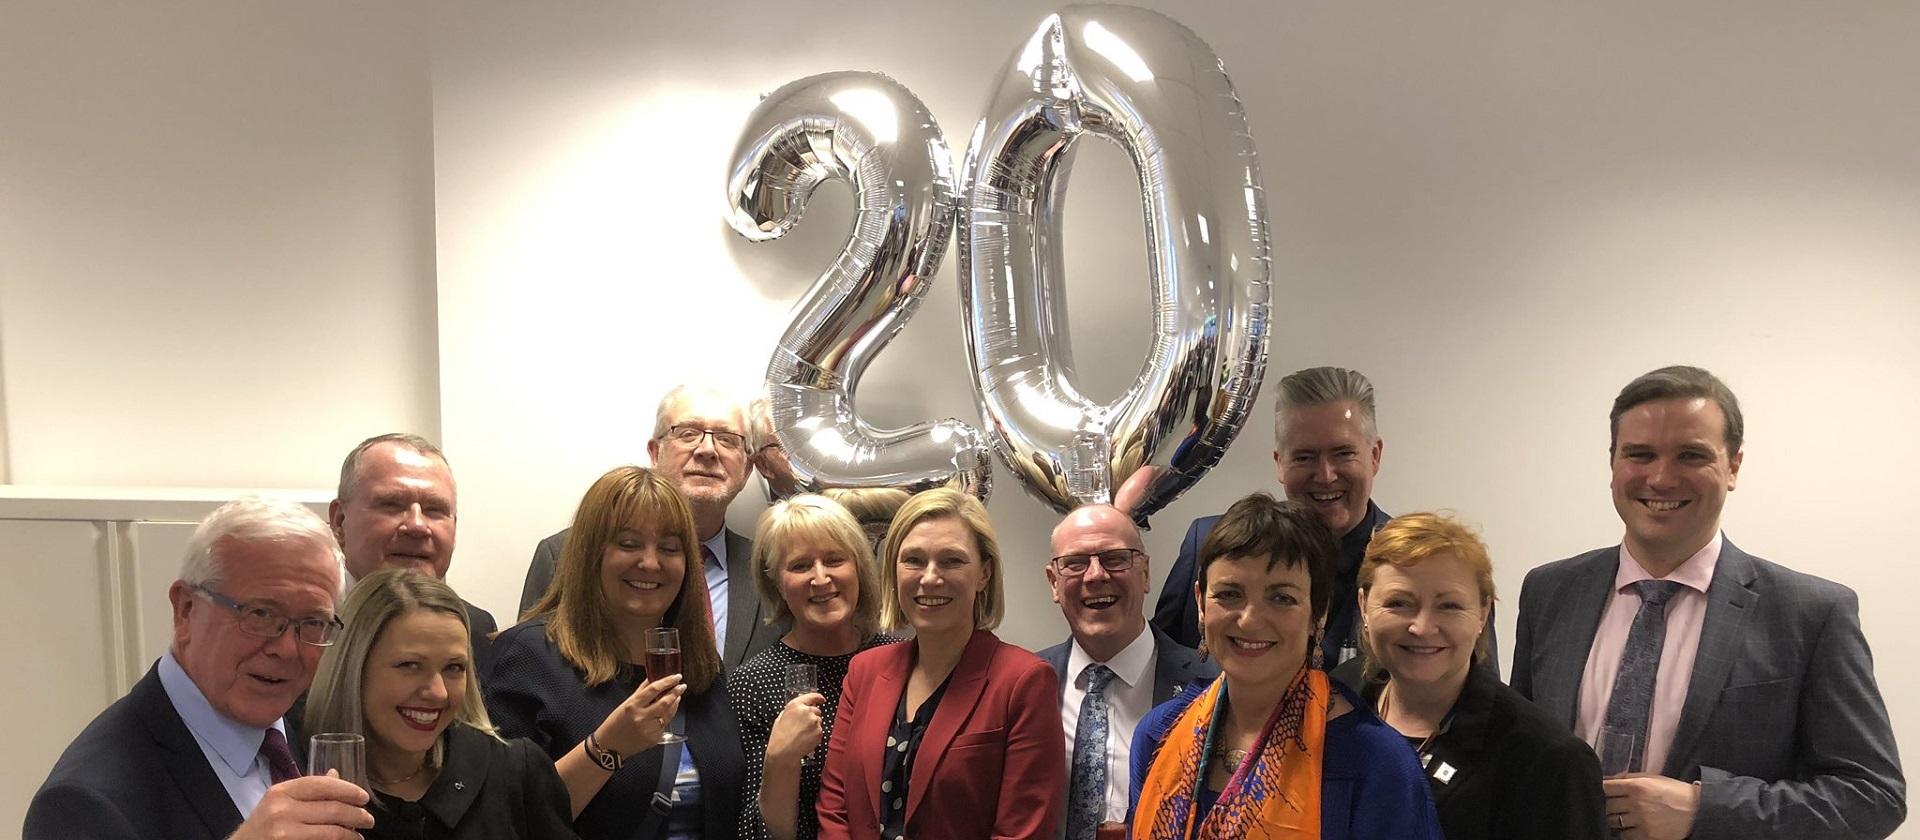 Celebrating 20 years since Scottish Parliament reconvened